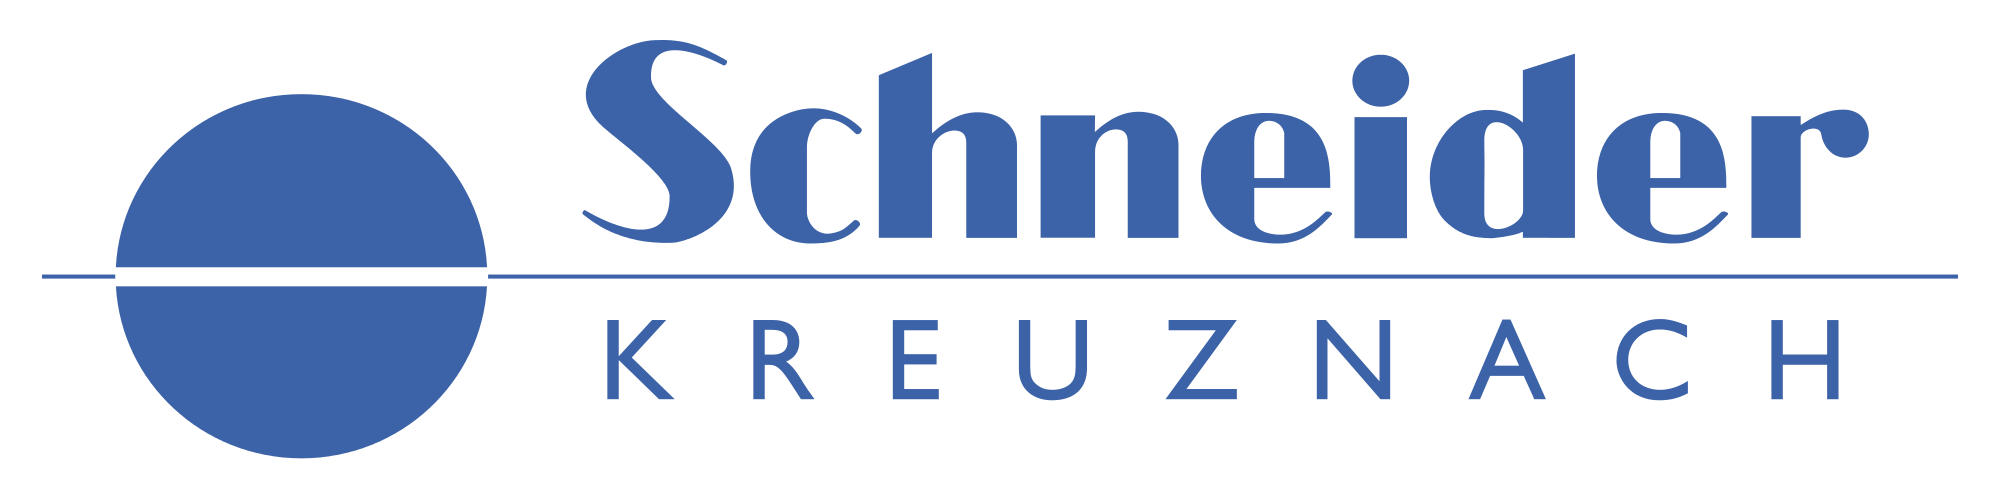 2000px-Schneider_kreuznach_Logo.svg.png